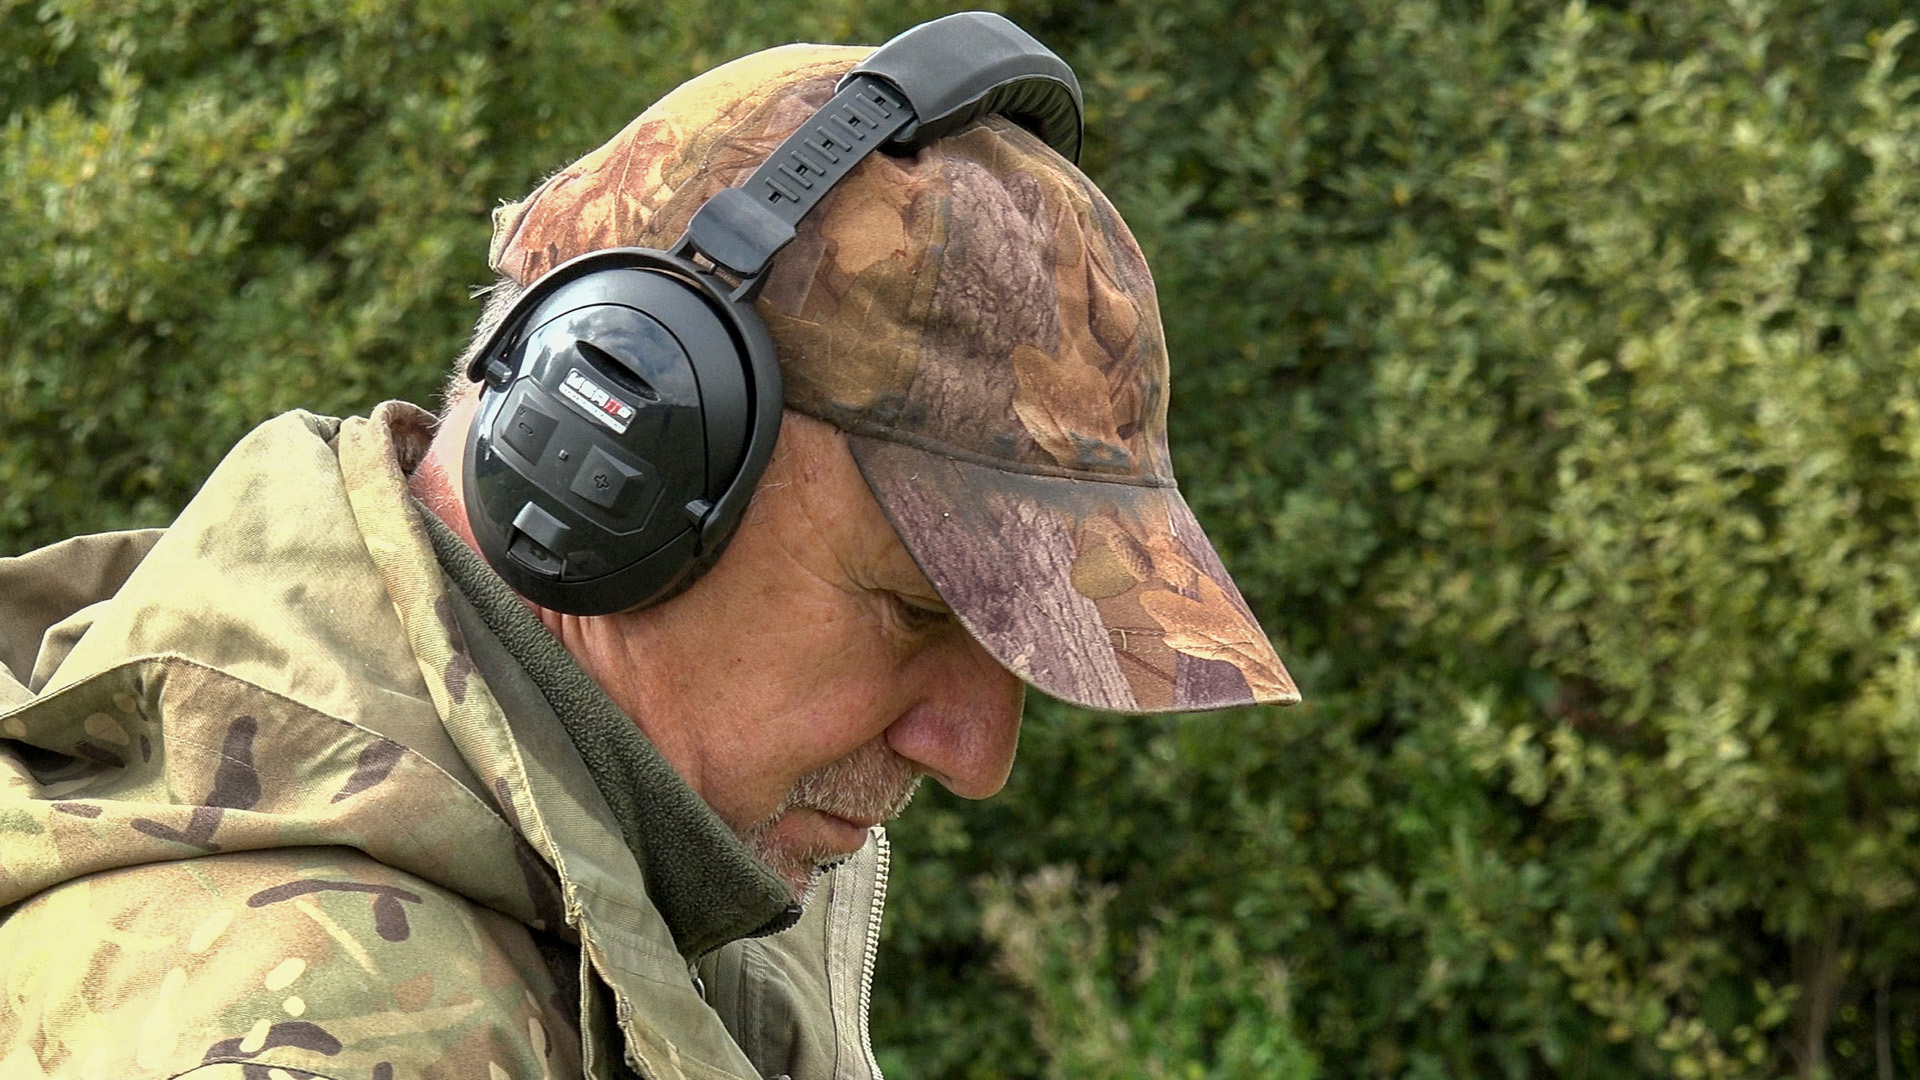 man in camouflage wearing headphones while metal detecting